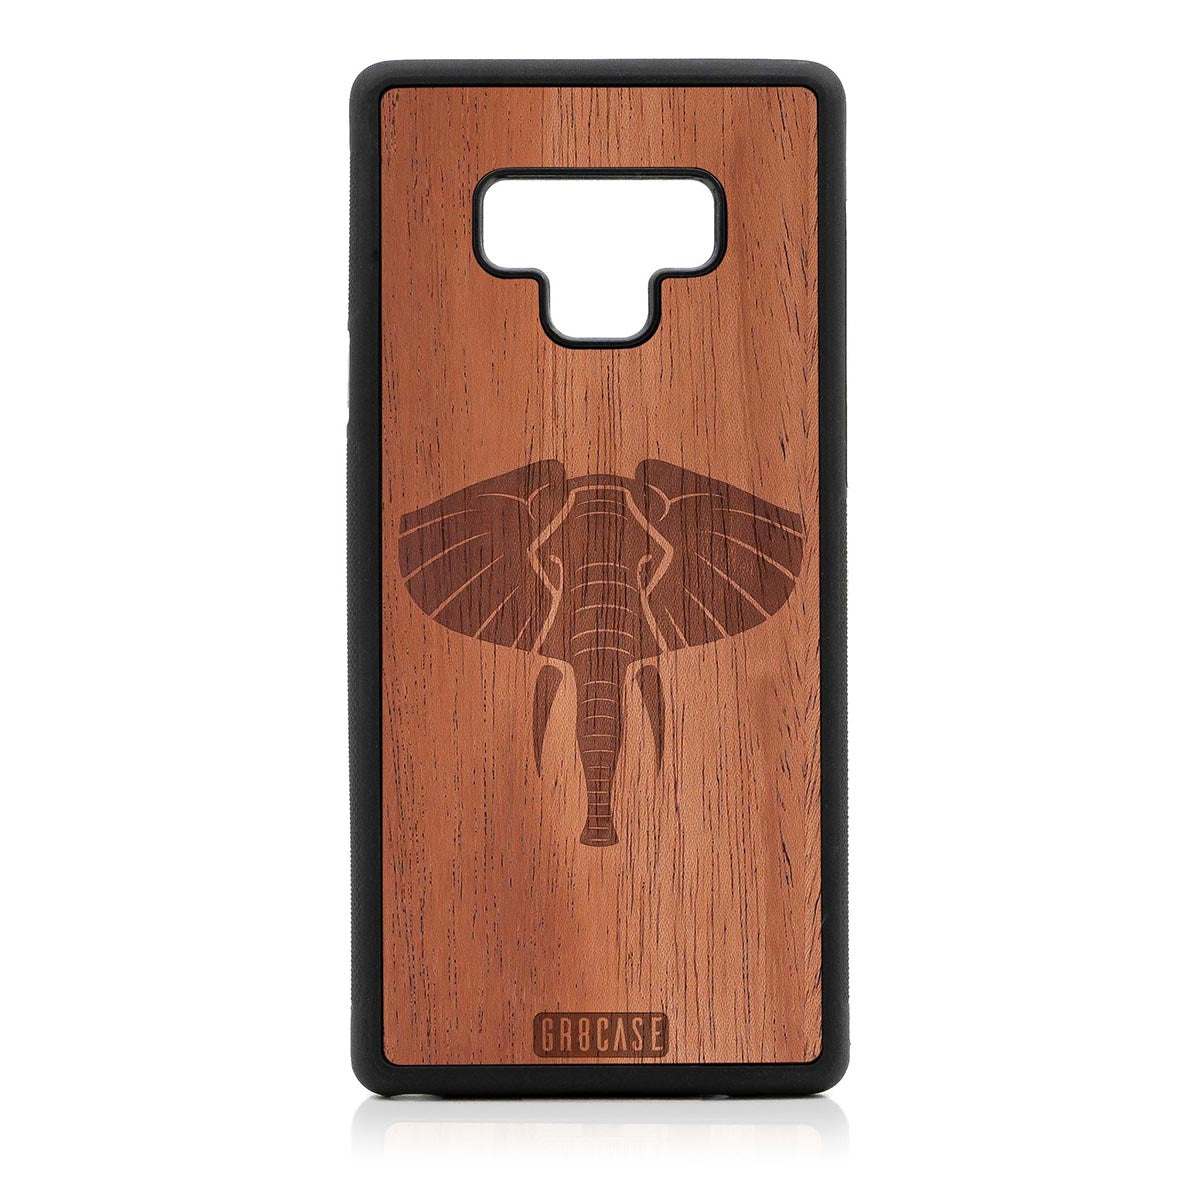 Elephant Design Wood Case Samsung Galaxy Note 9 by GR8CASE